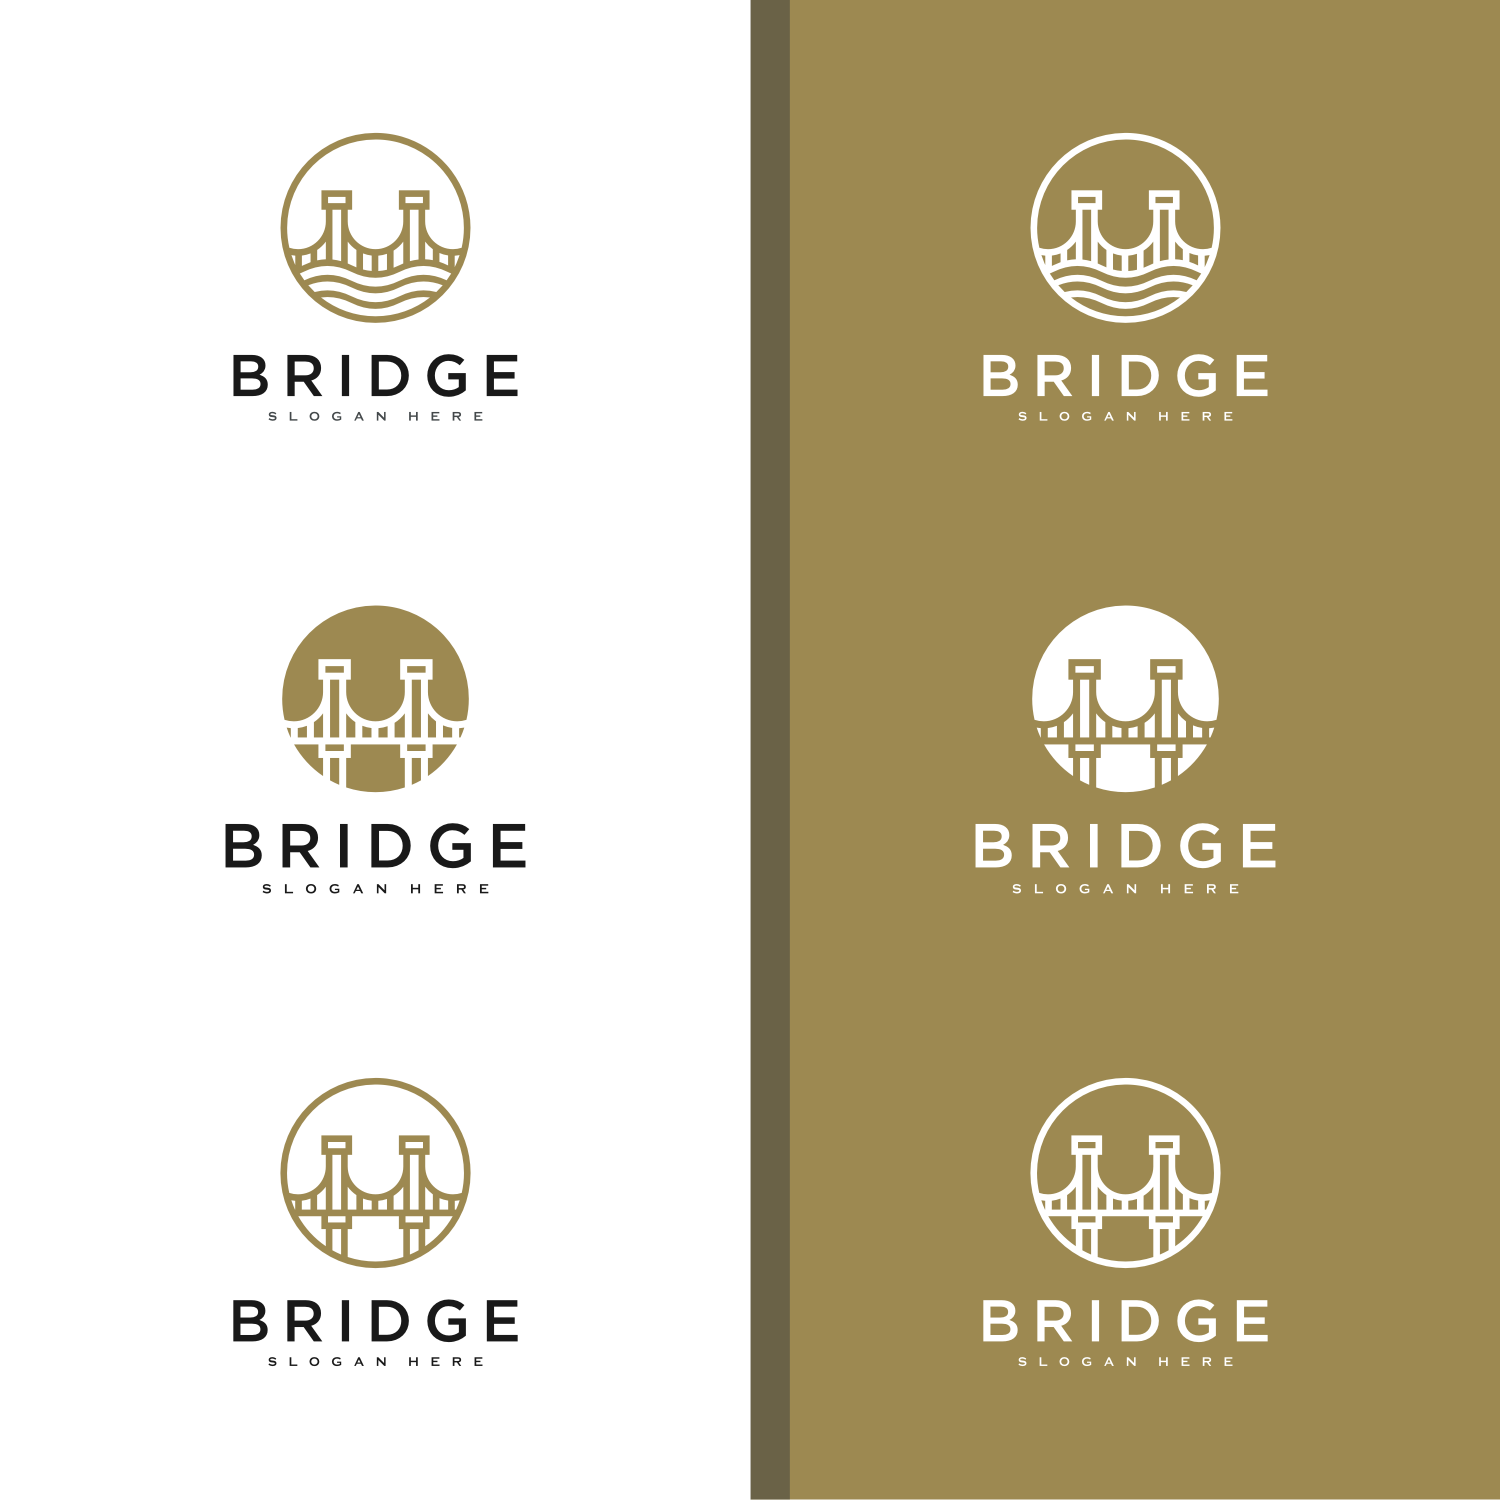 Set Of Bridge Architecture And Constructions Logo Design Cover Image.